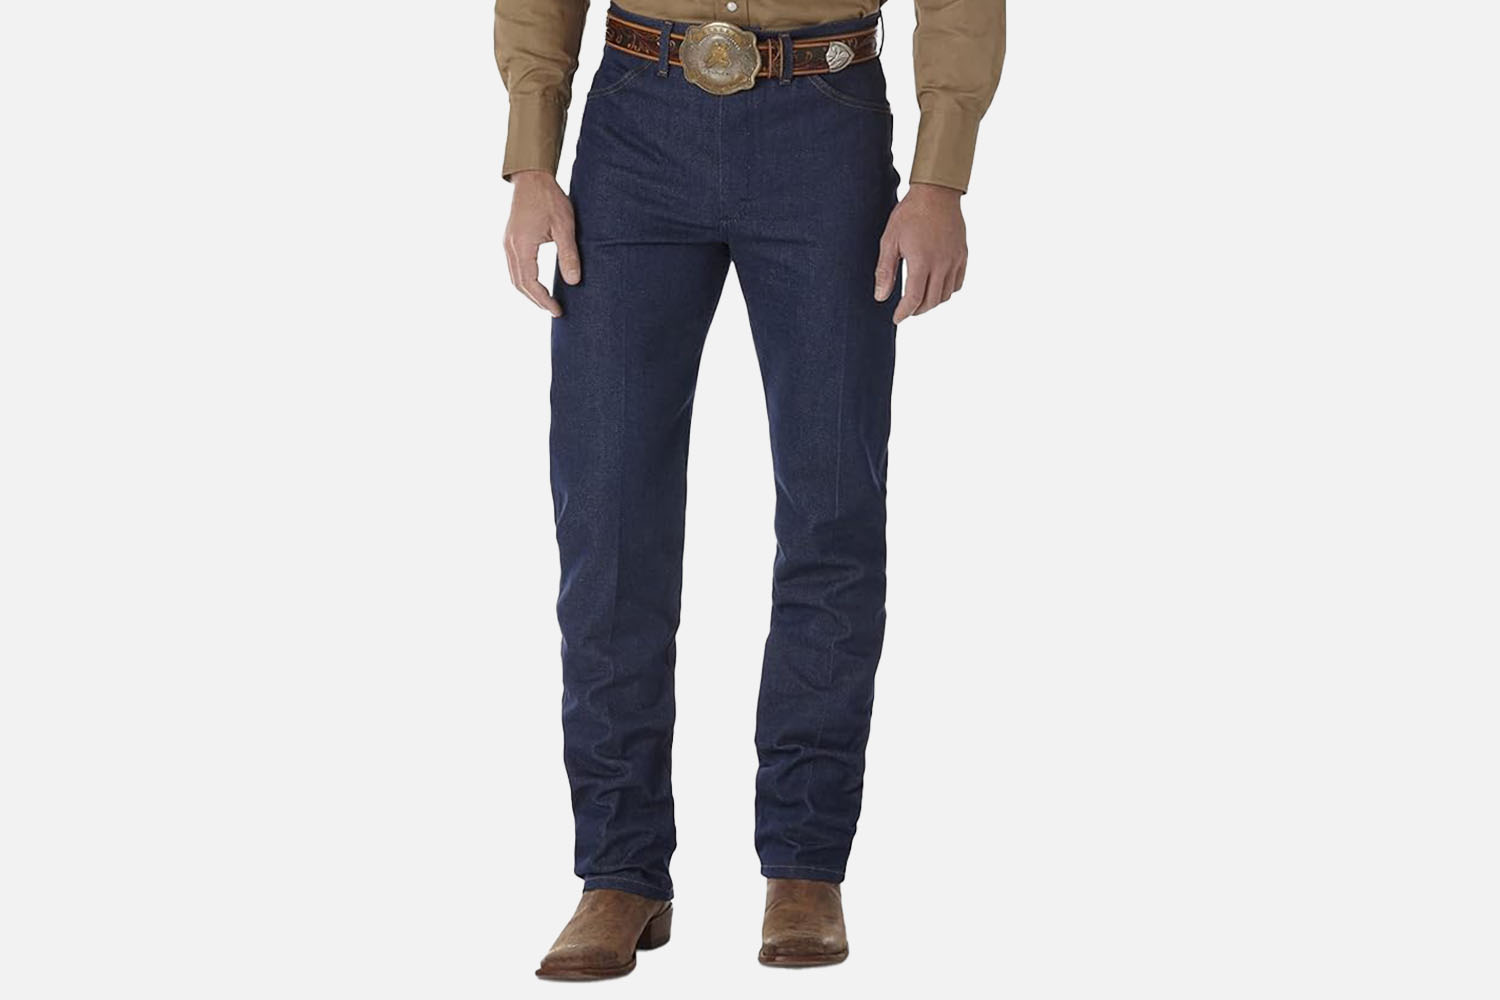 Wrangler Men's 13MWZ Cowboy Cut Original Fit Jeans